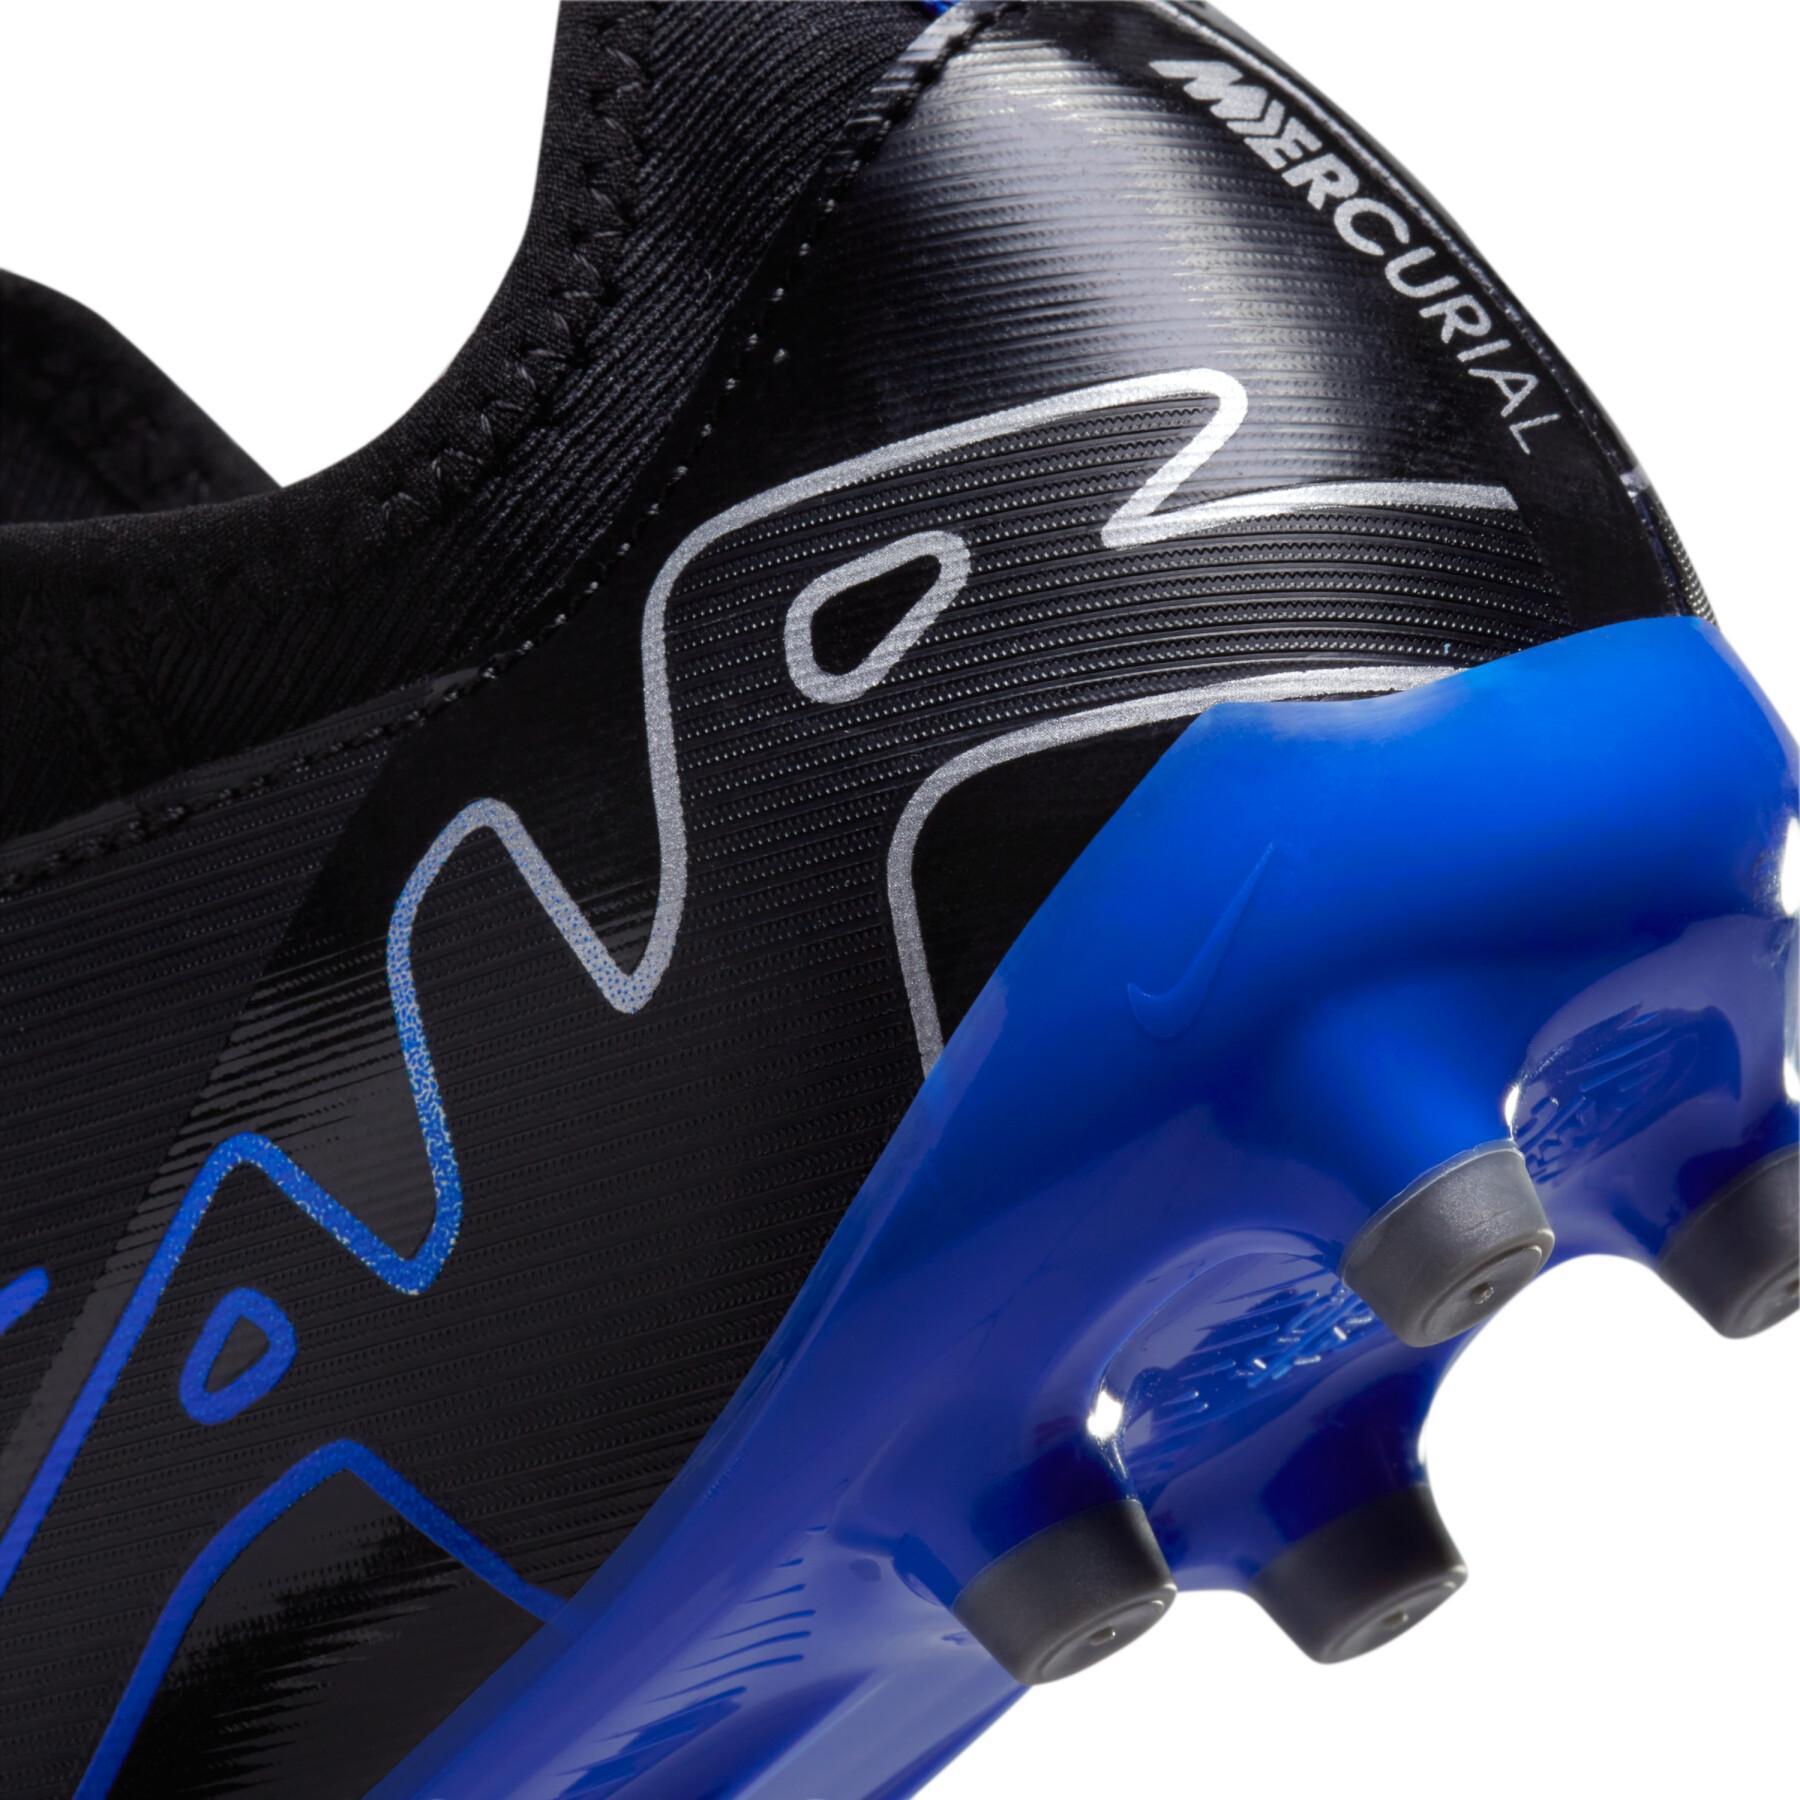 Chaussures de football enfant Nike Mercurial Vapor 15 Academy MG